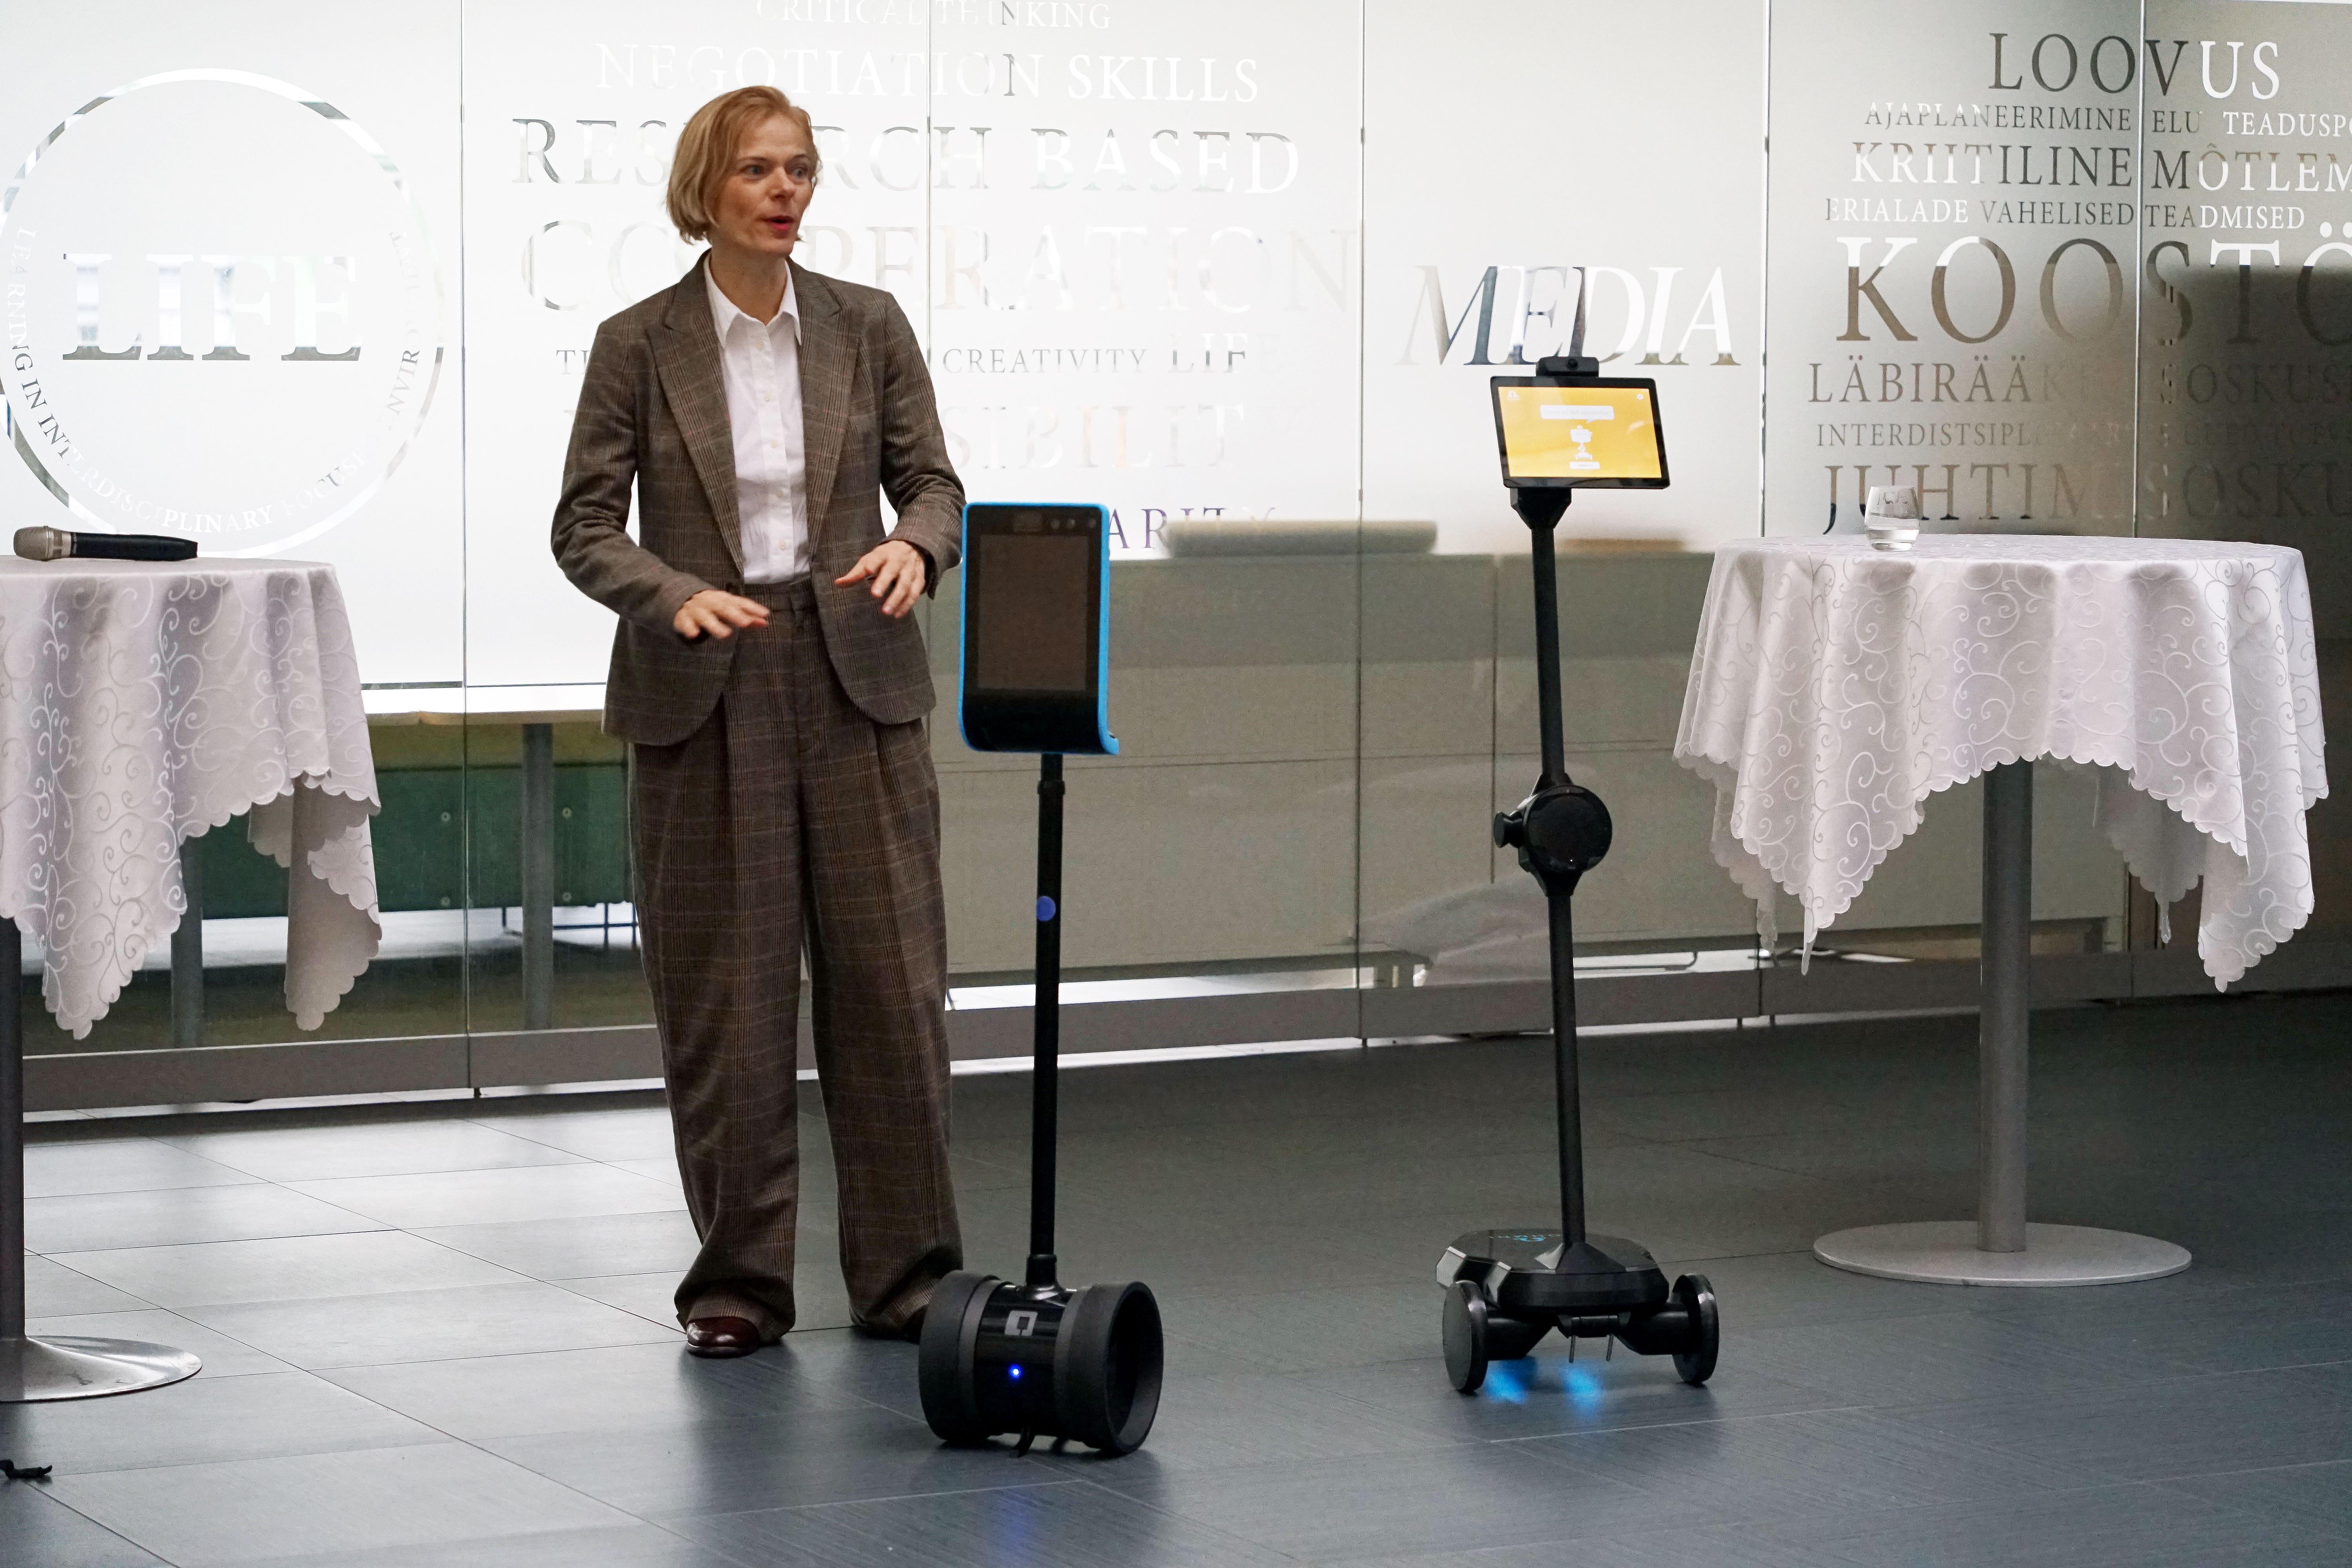 Workshop on telepresence robotics in Tallinn University